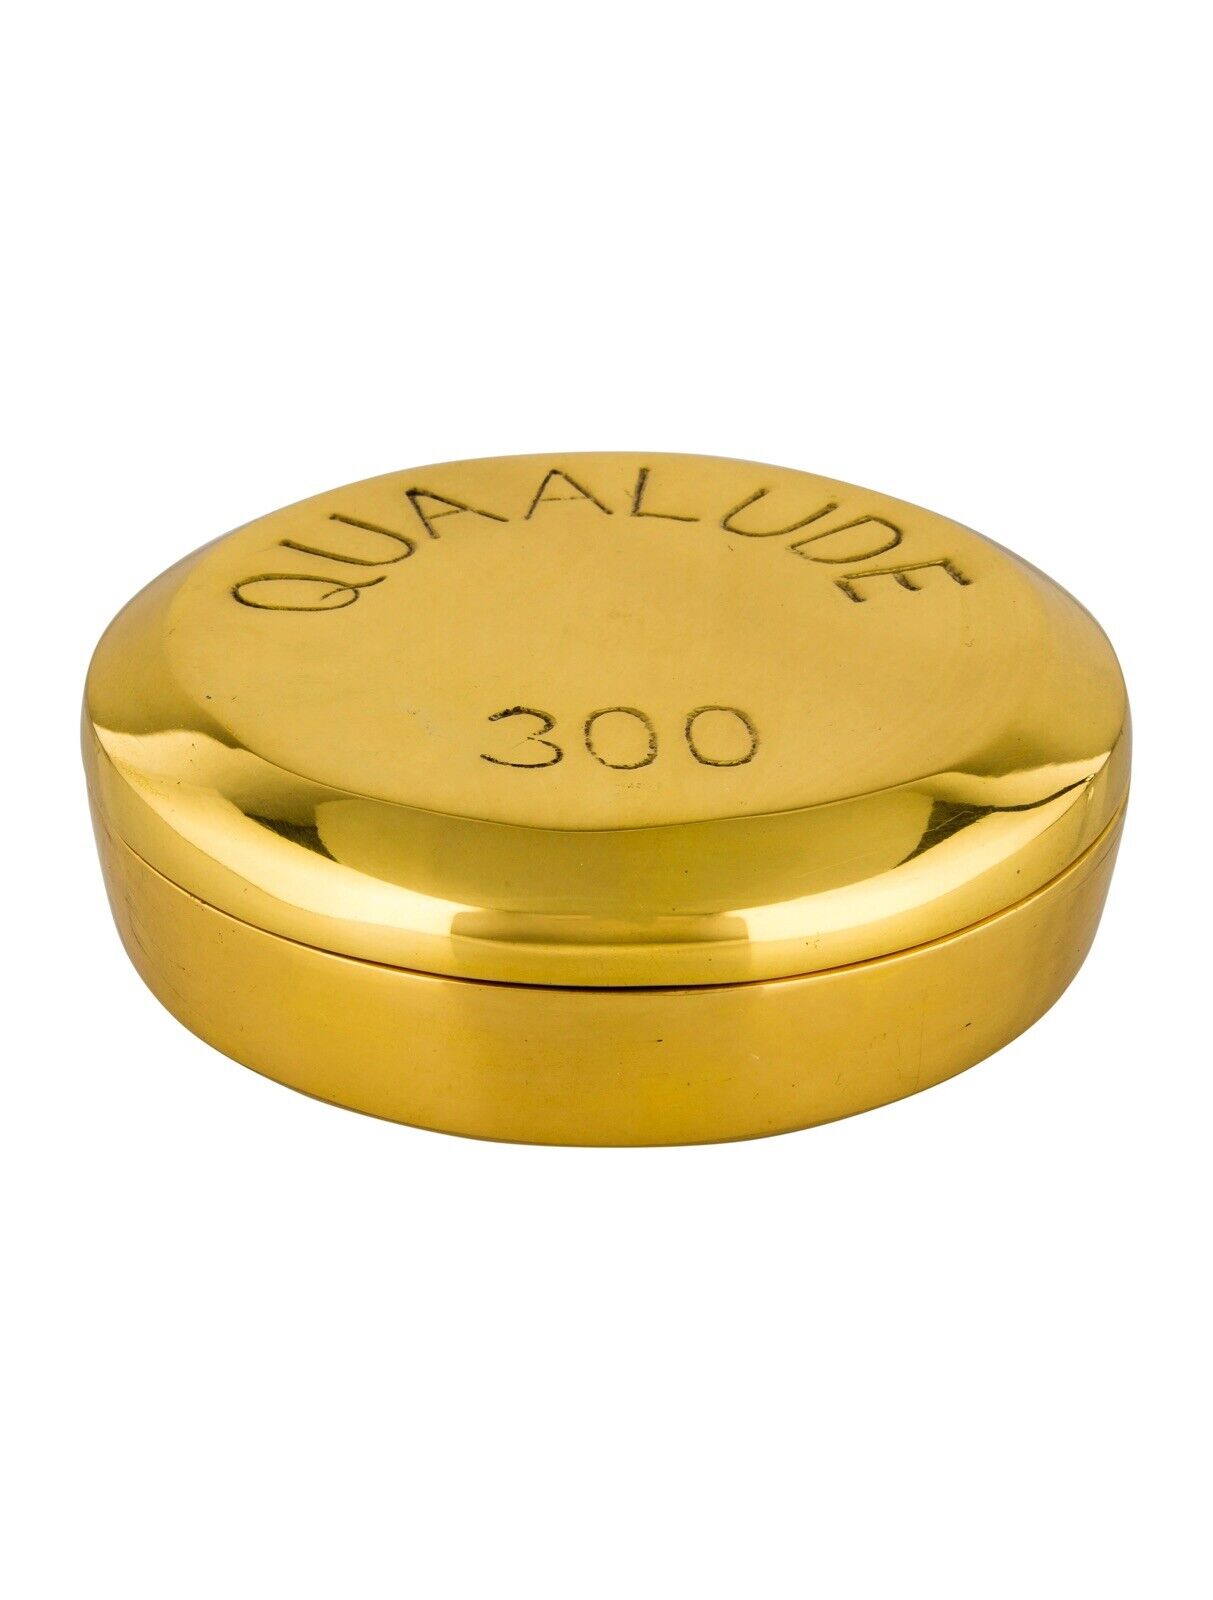 New Jonathan Adler - Vintage Large Brass Pill Box - Quaalude 300